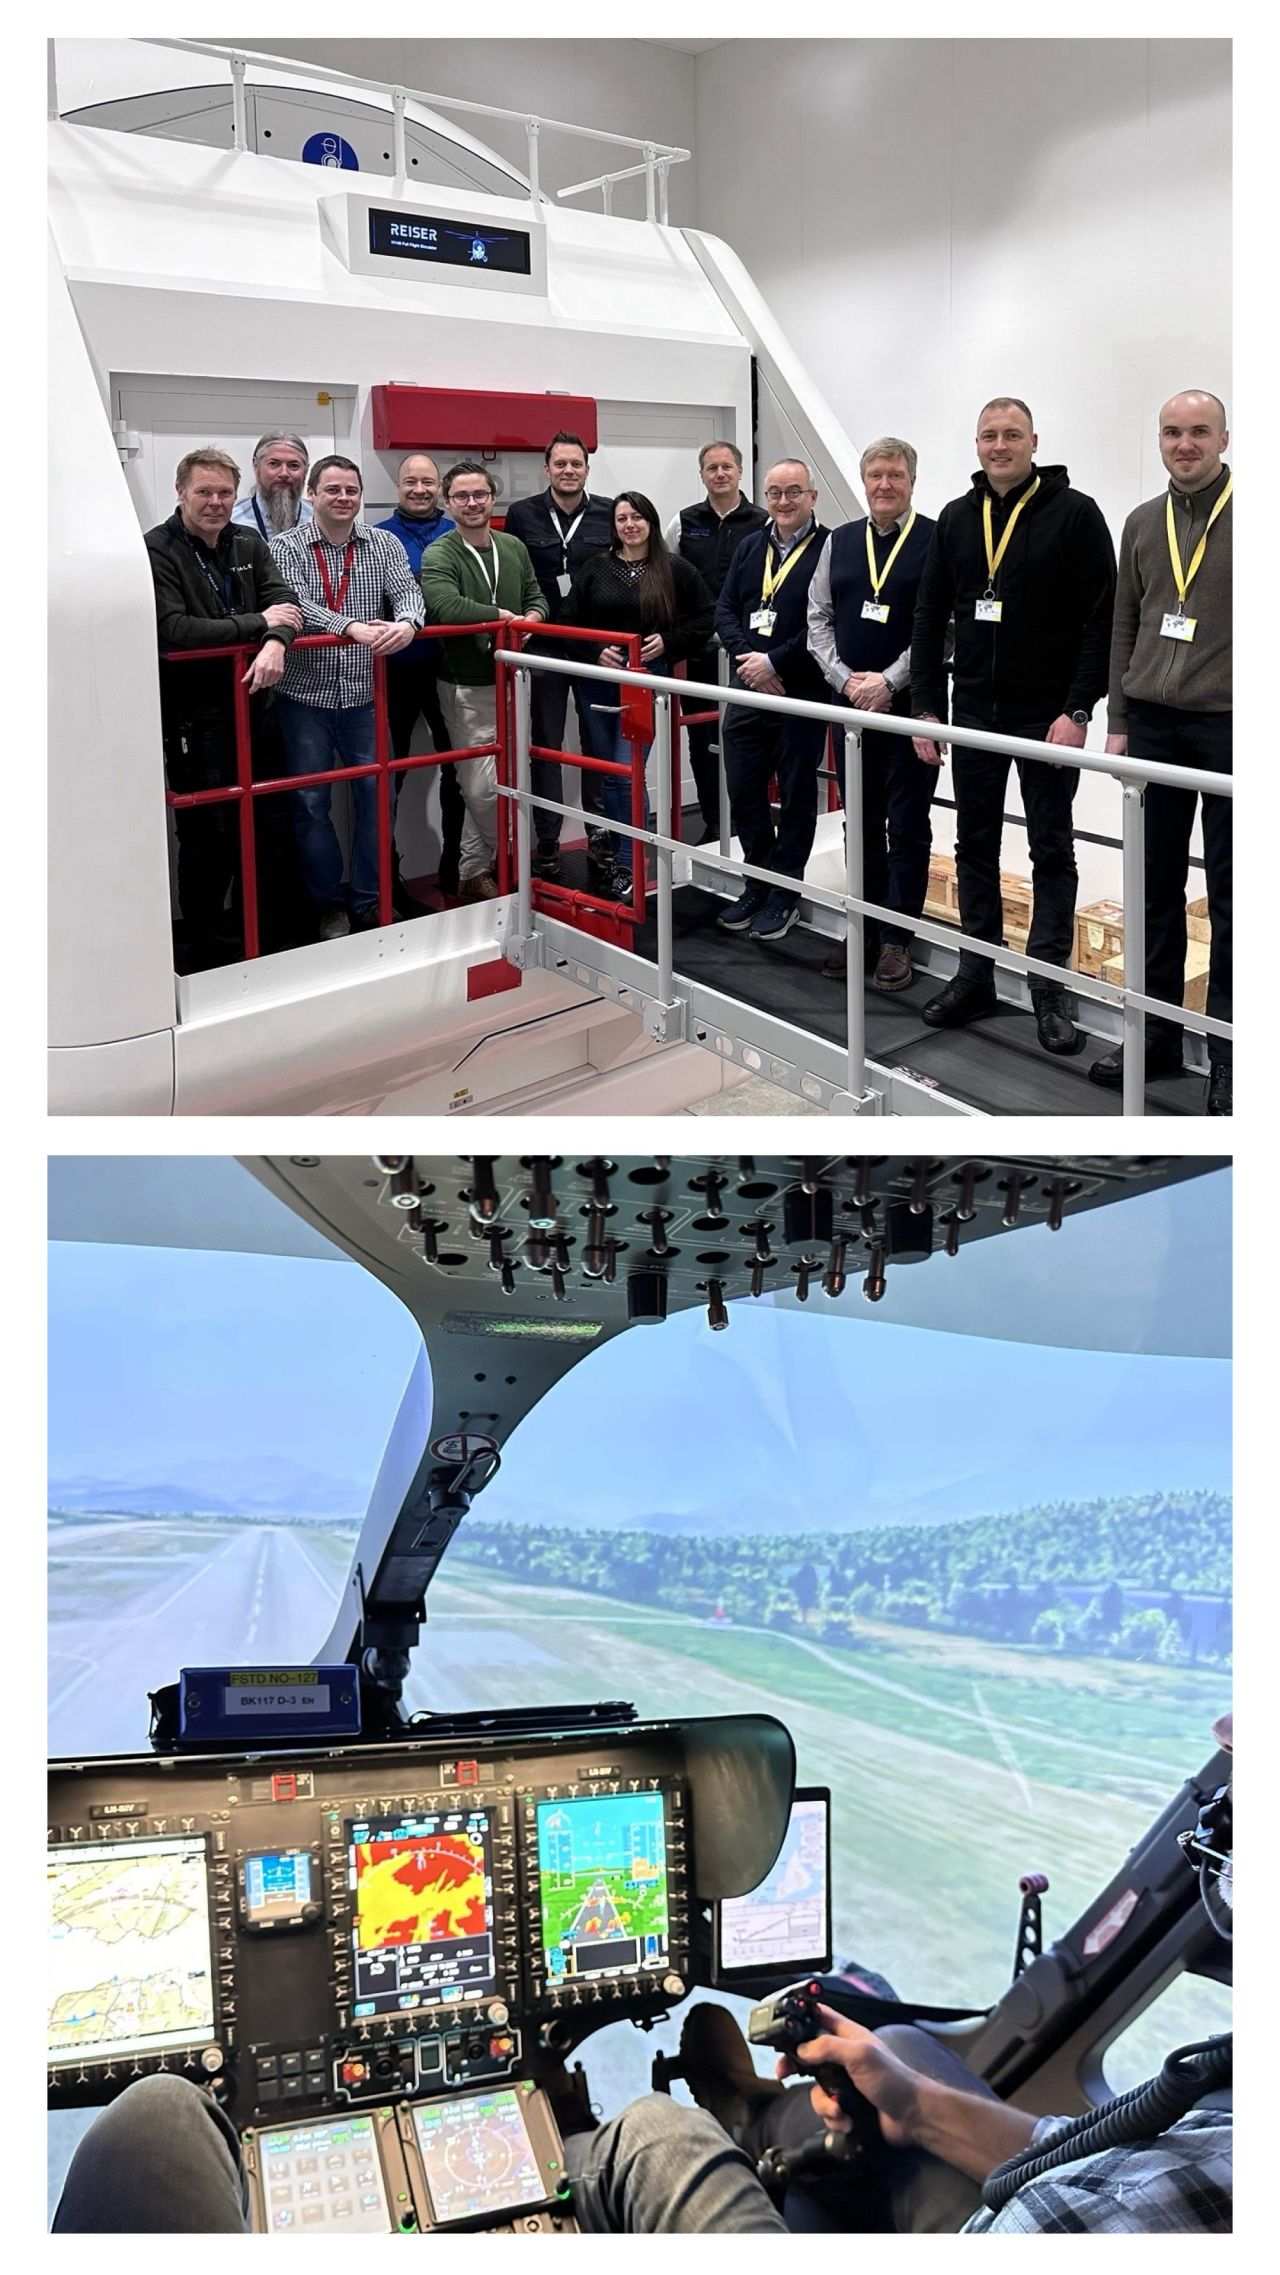 RotorSky GmbH - Pilot Training AFM.aero